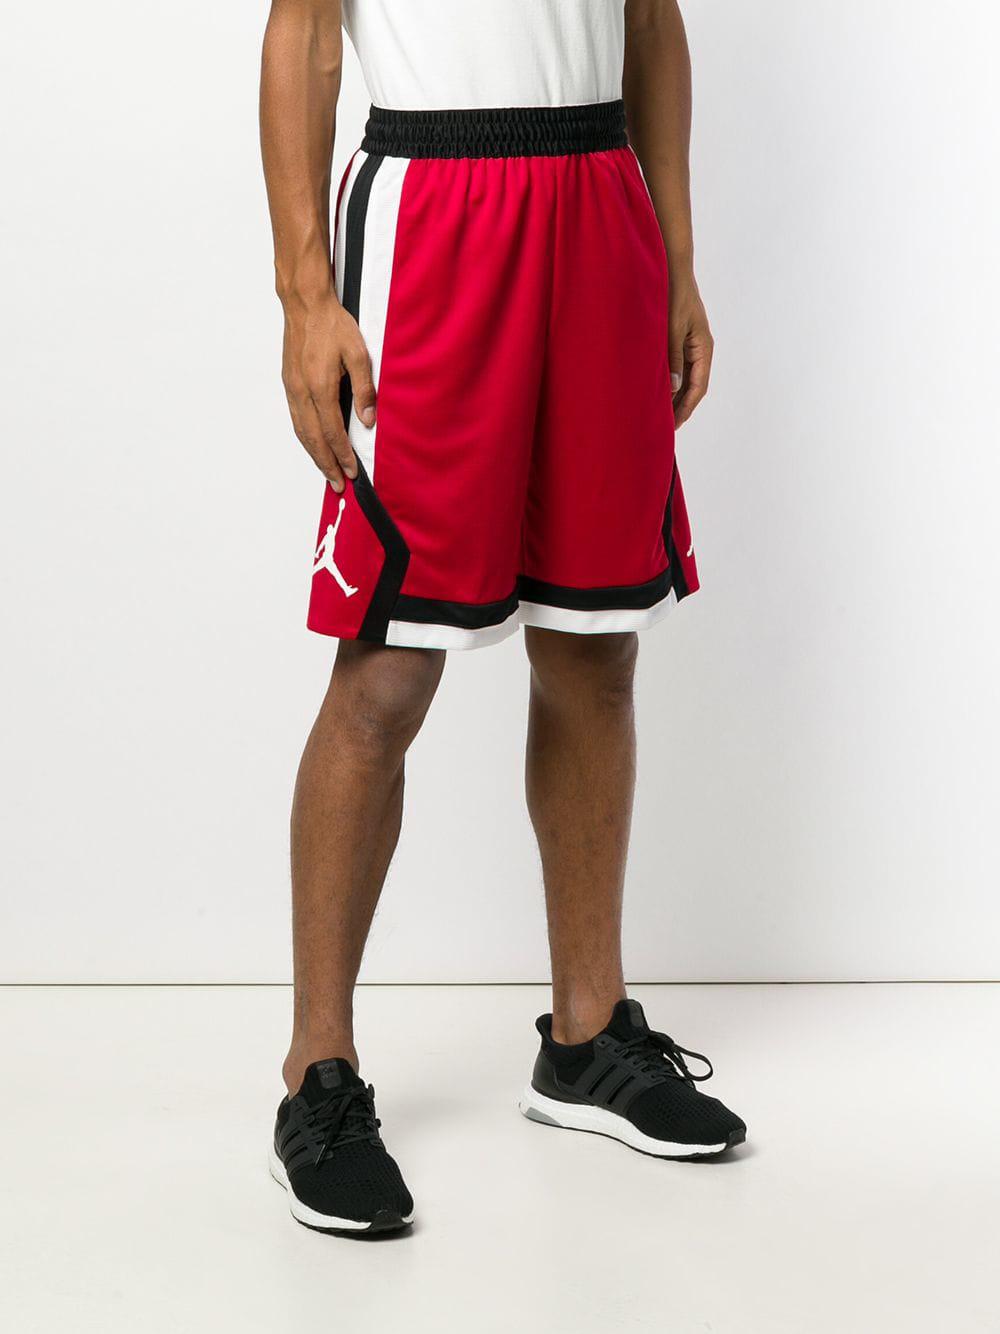 Nike Air Jordan Basketball Shorts in Red for Men - Lyst